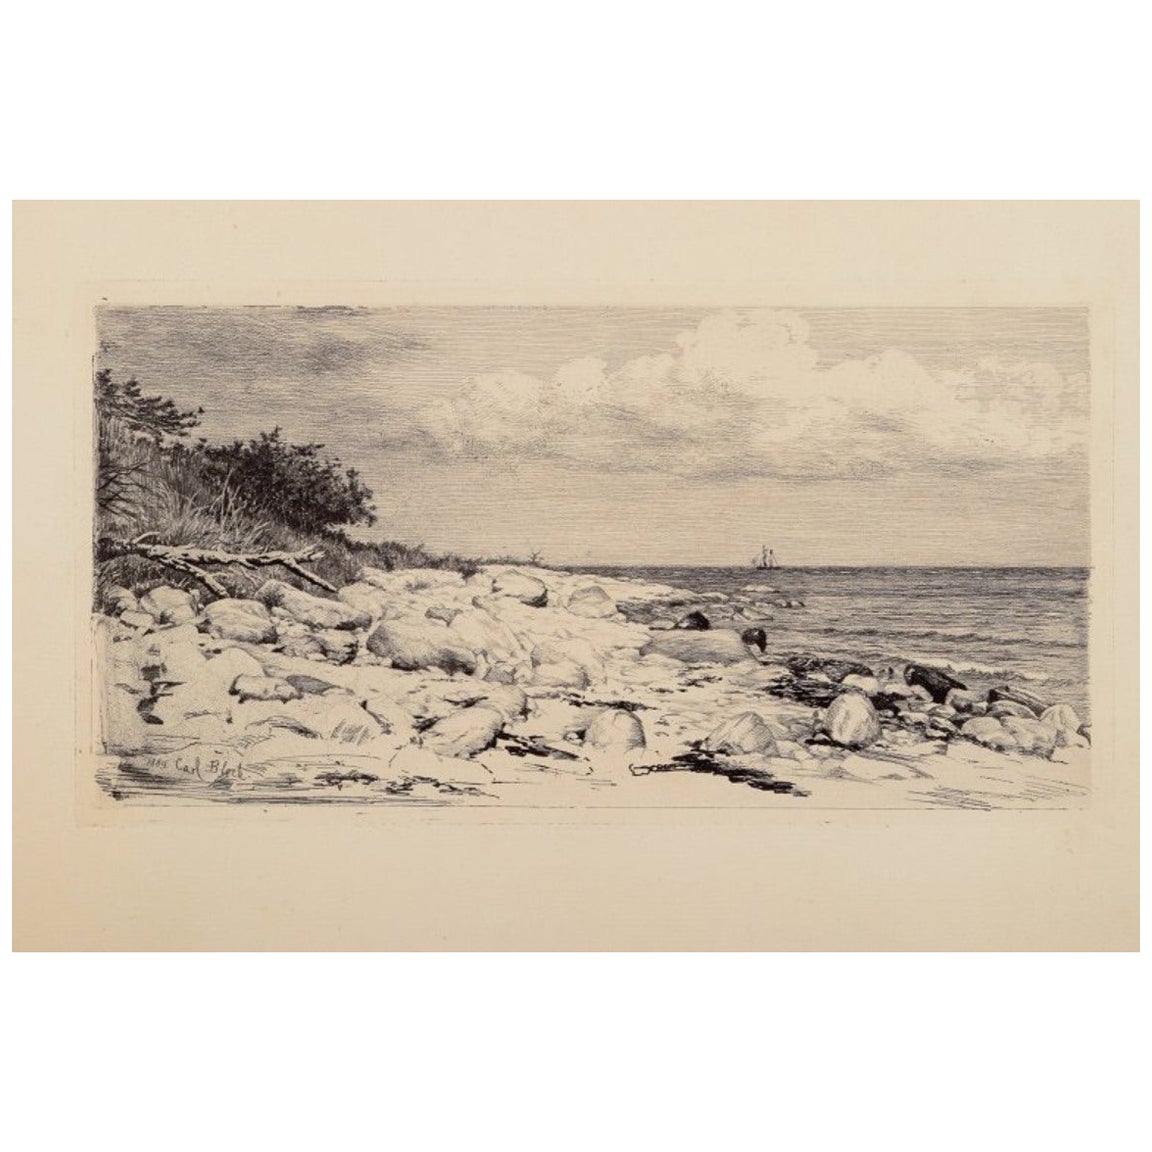 Carl Bloch (1834–1890). Etching on paper. Danish coastal landscape